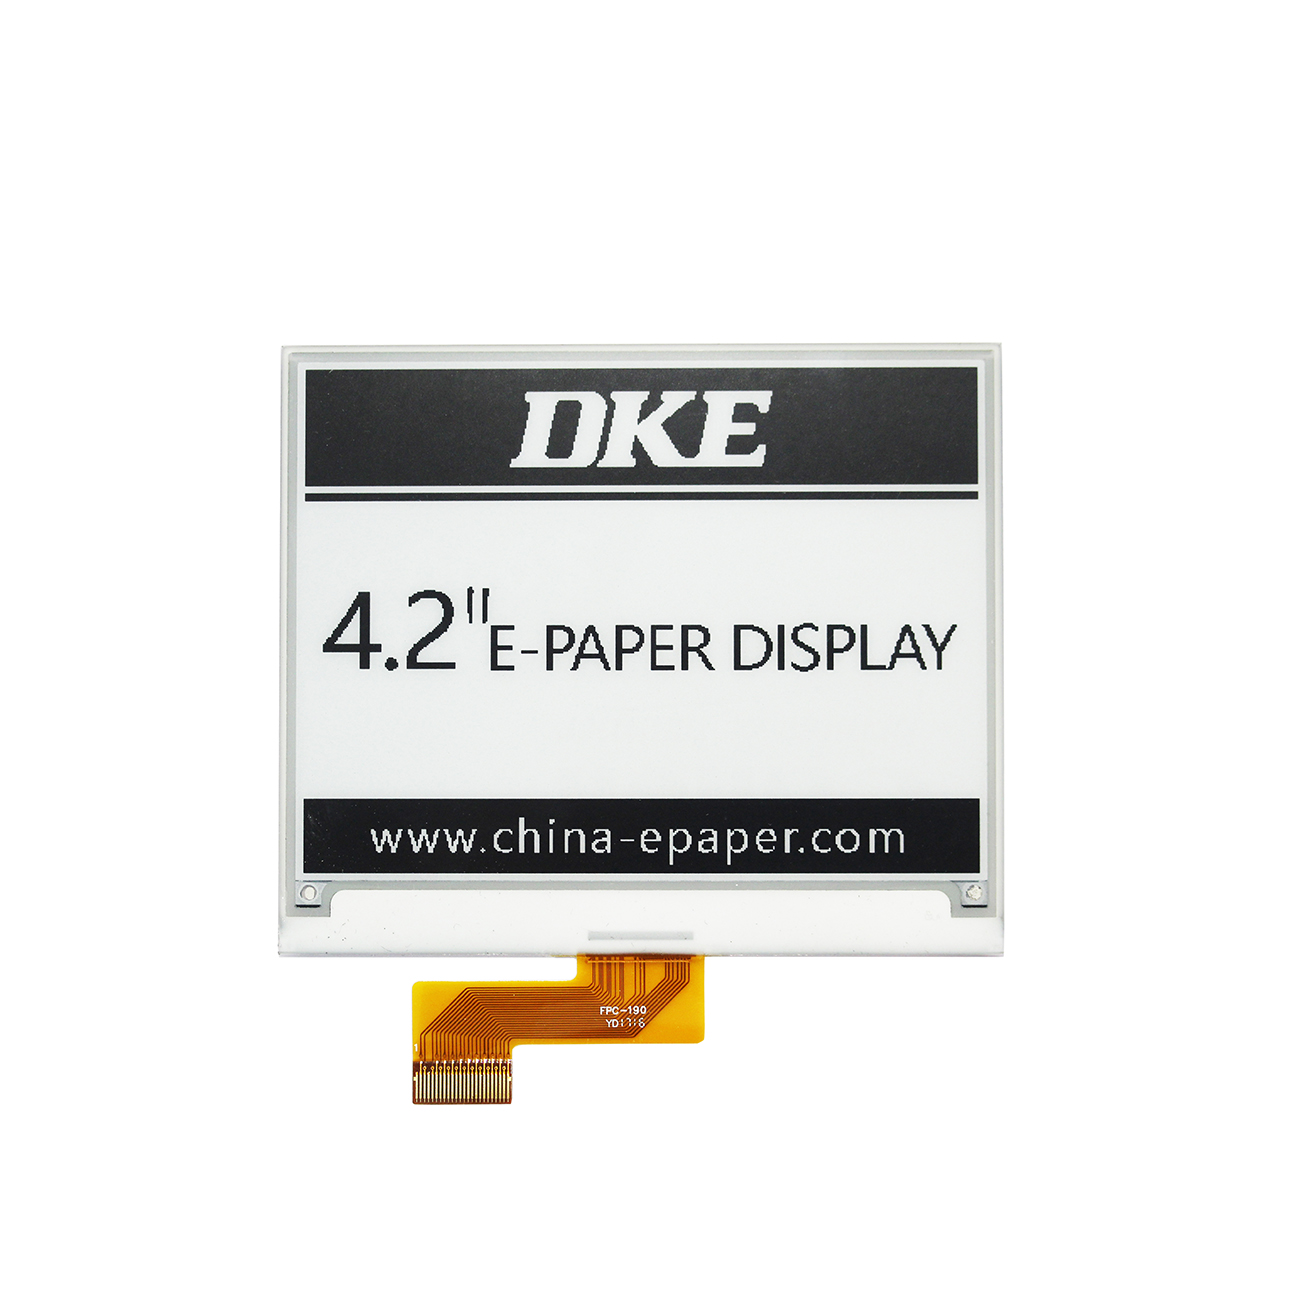 DKE 4.2 Inch Epaper Display